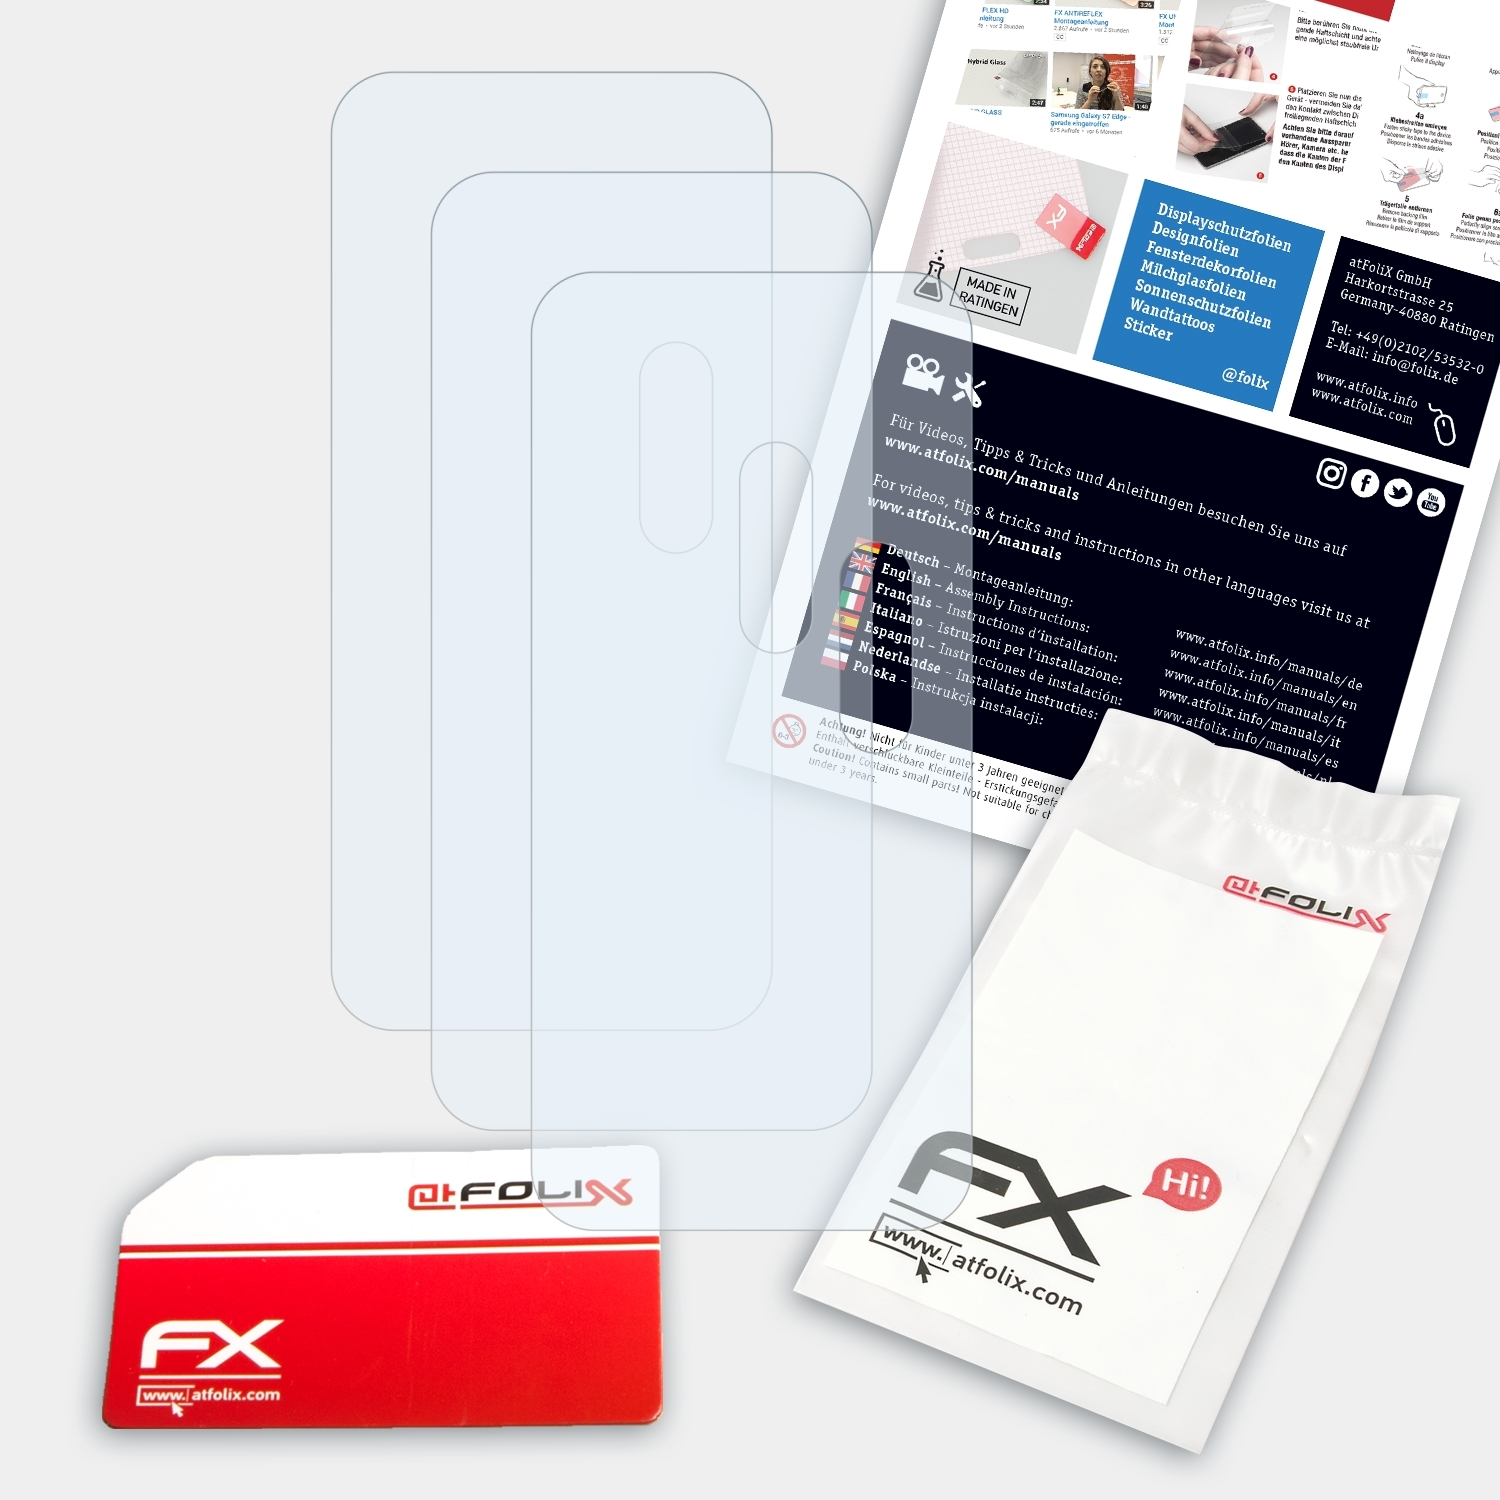 Tecno 3x 2 Lens) FX-Clear ATFOLIX Pova Displayschutz(für